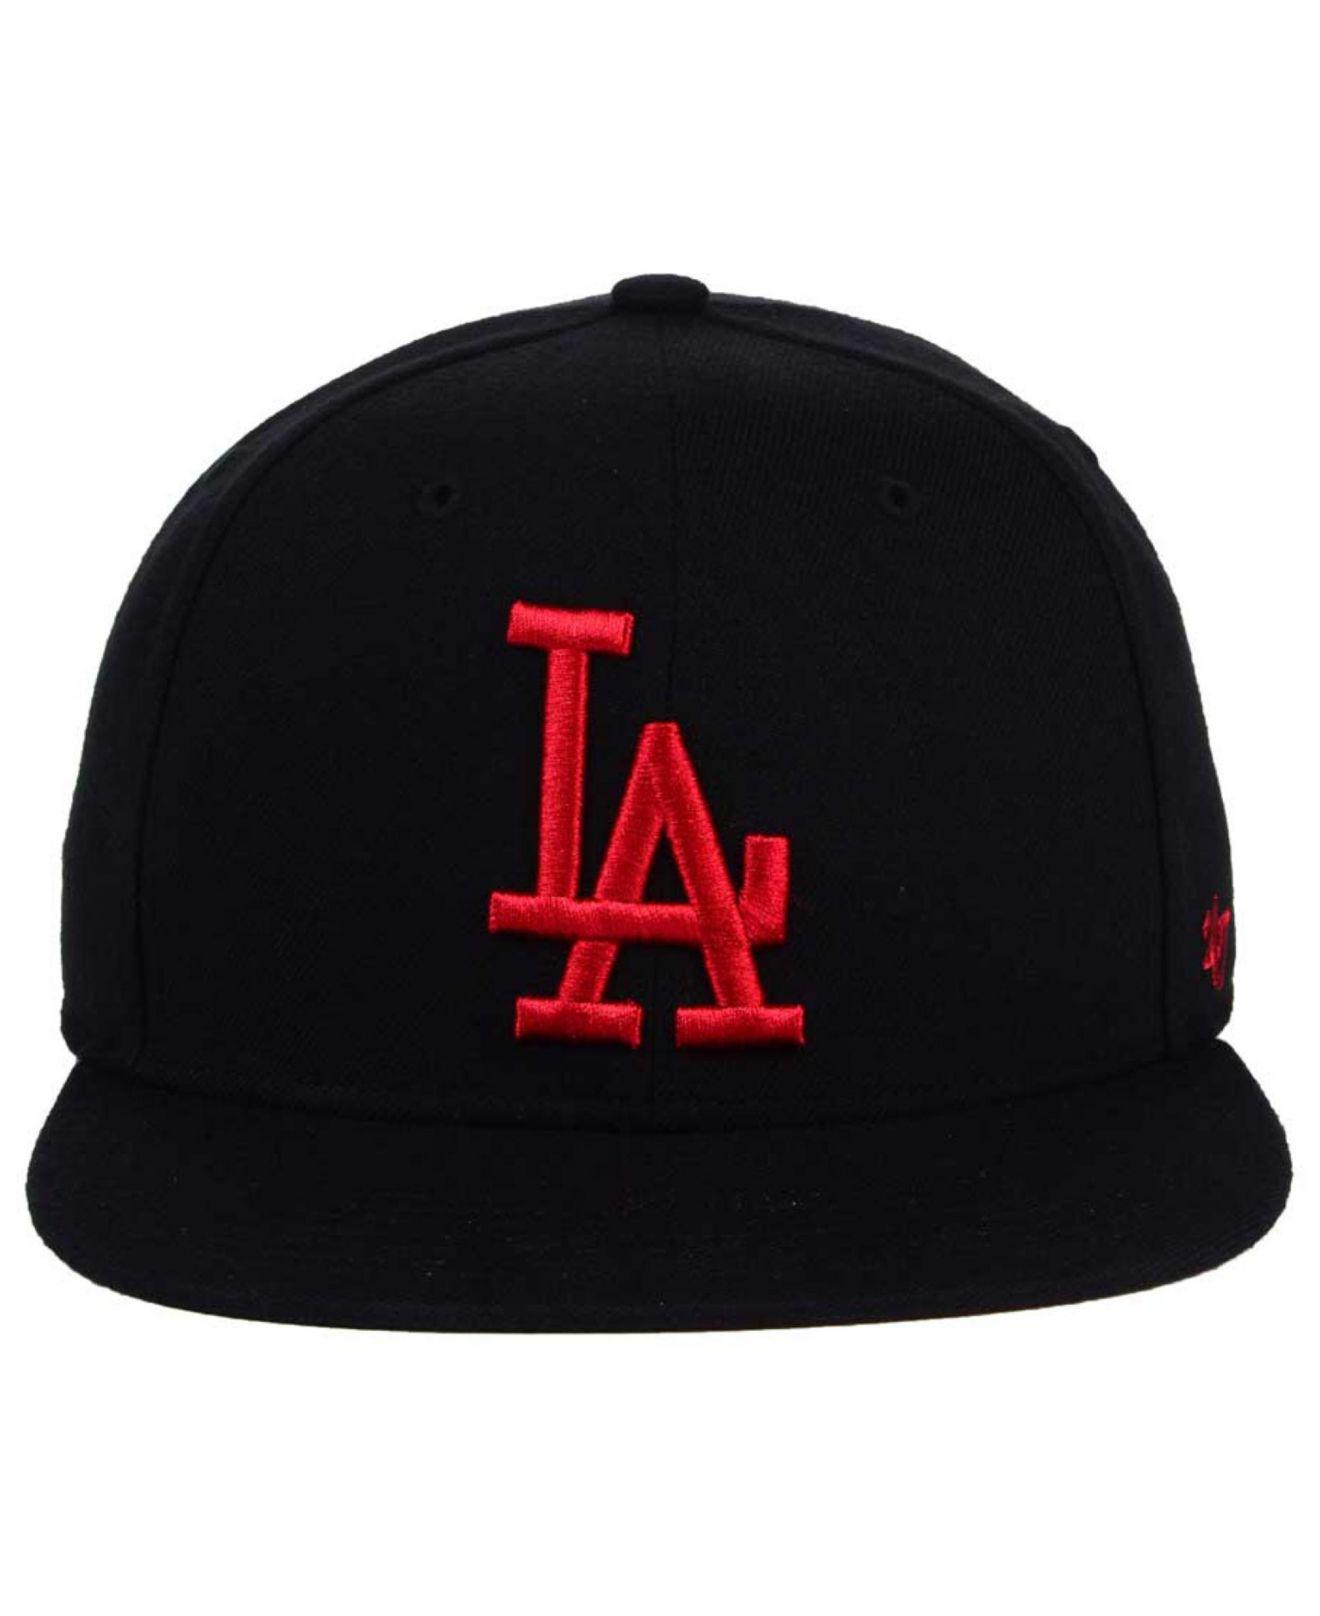 CAMOFILL LA Dodgers schwarz 47 Brand Adjustable Cap 